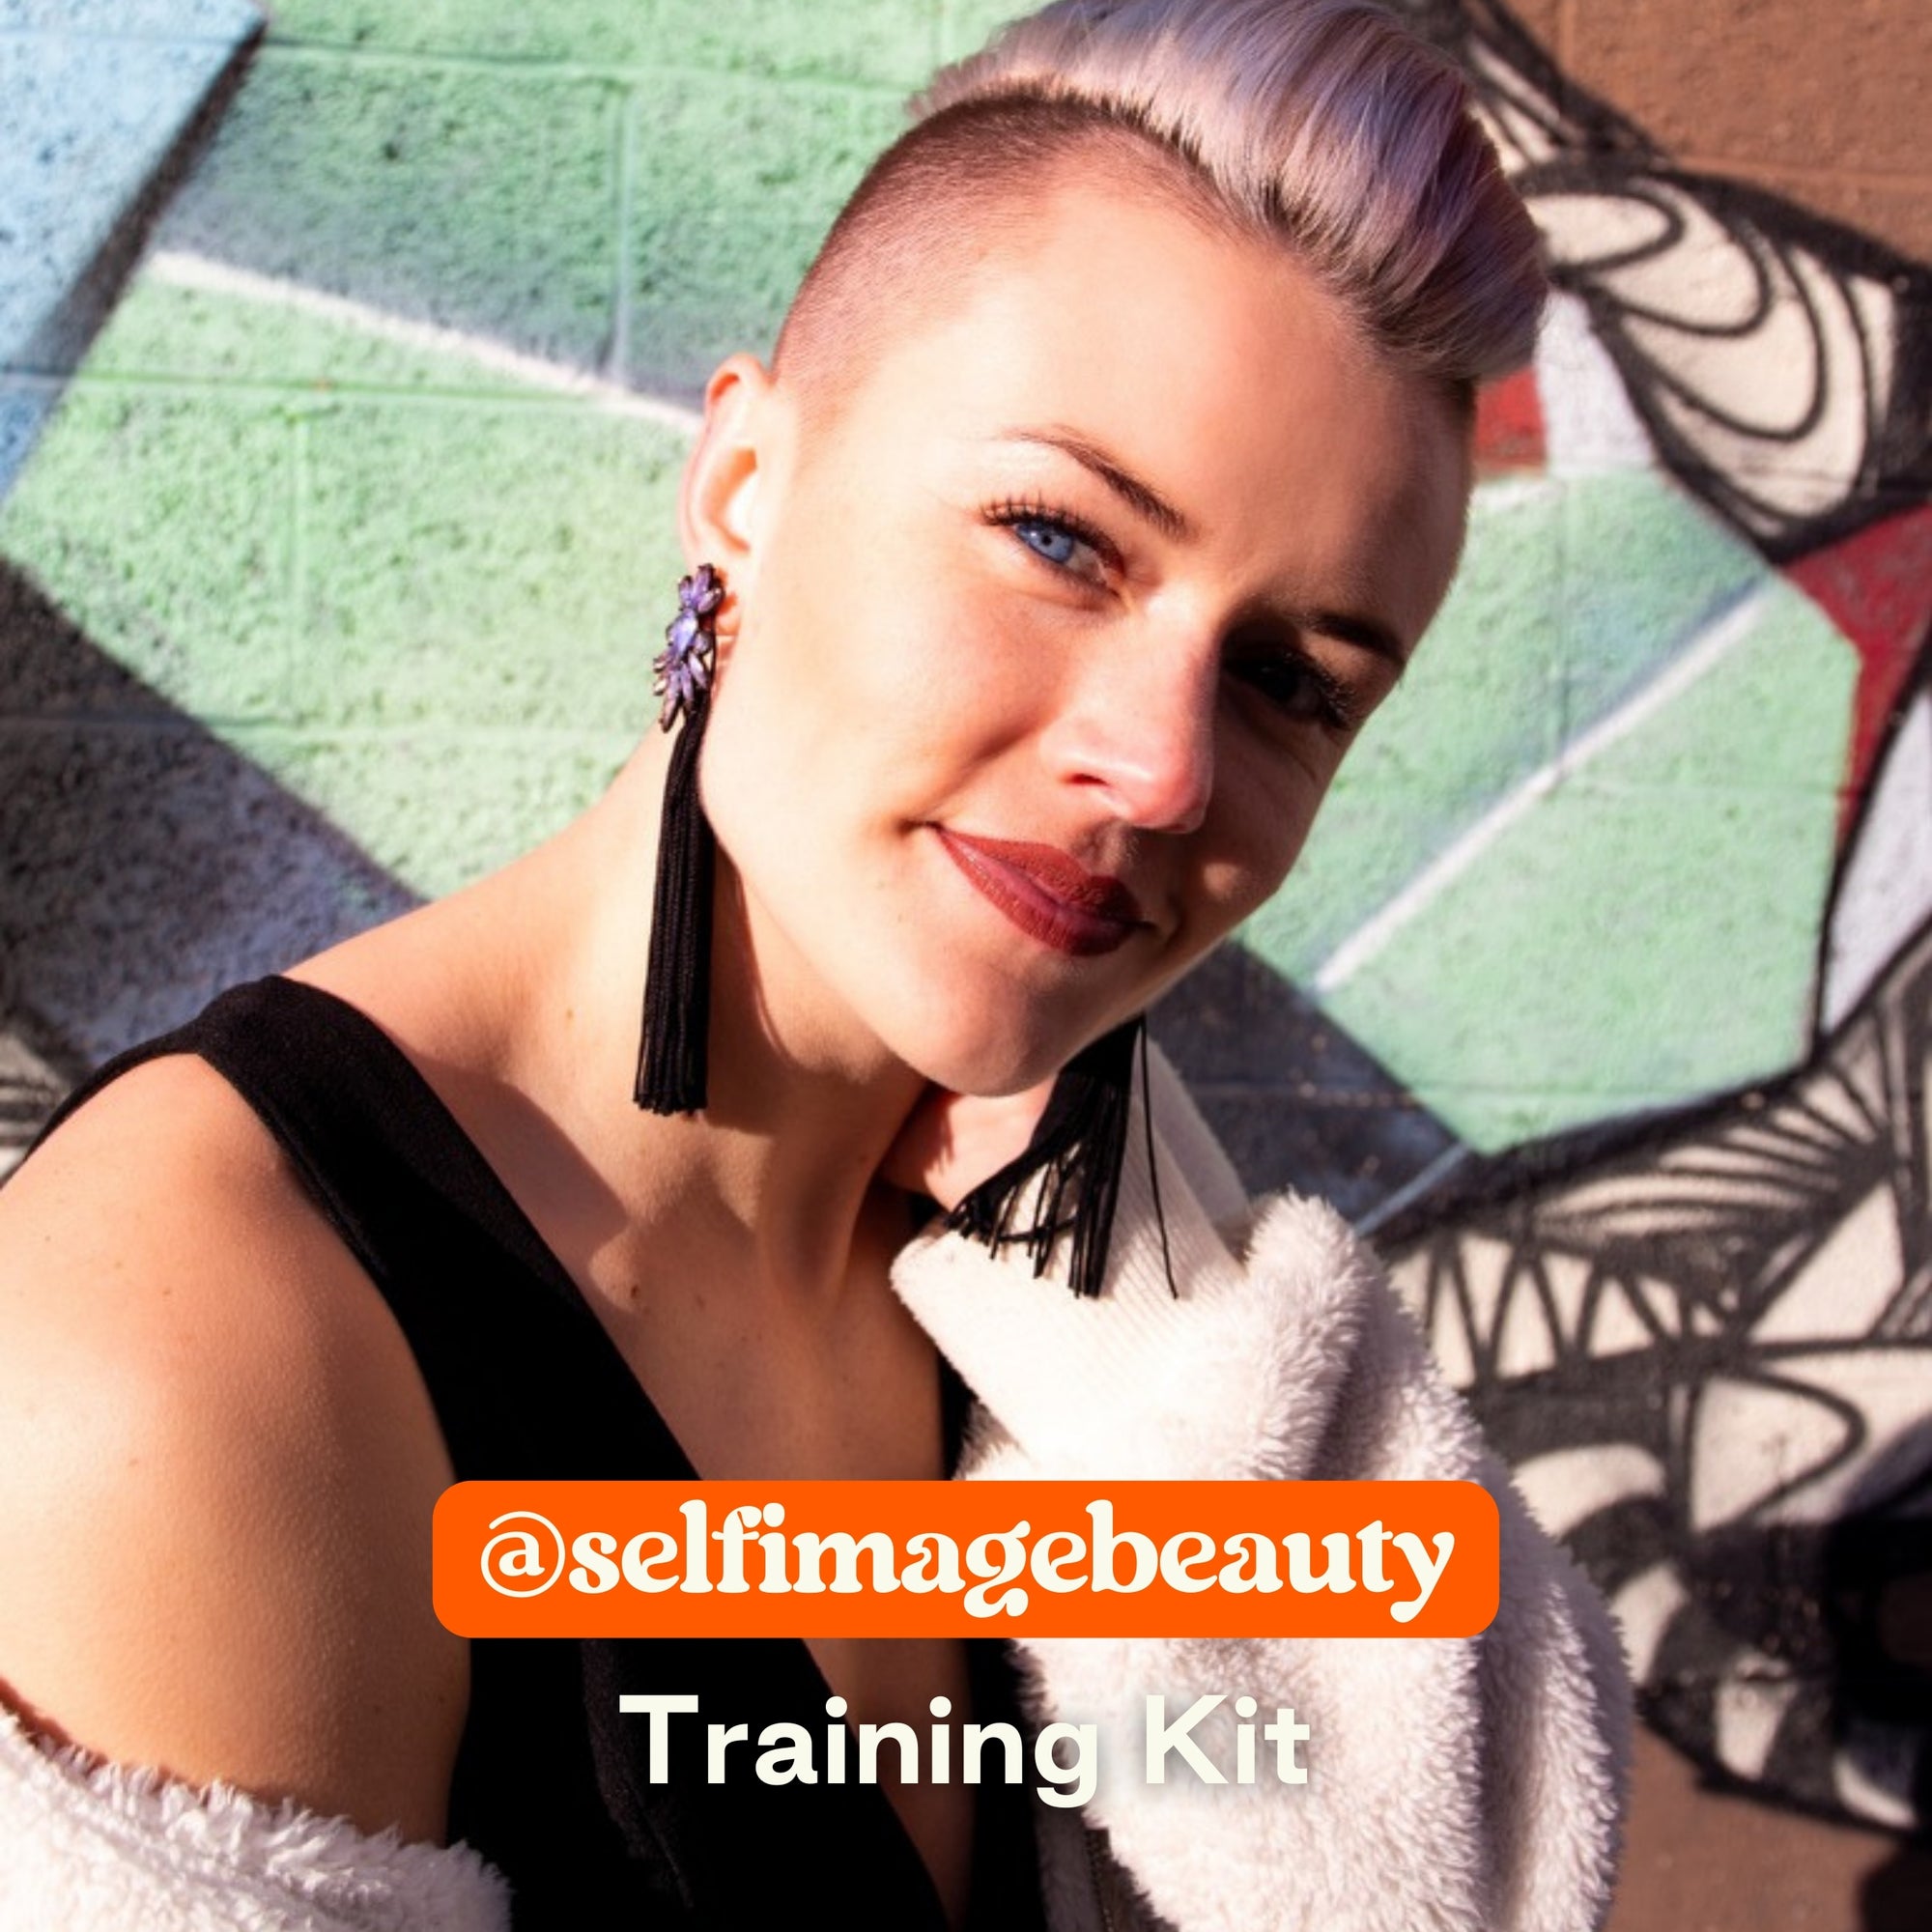 Self Image Beauty Training Kit